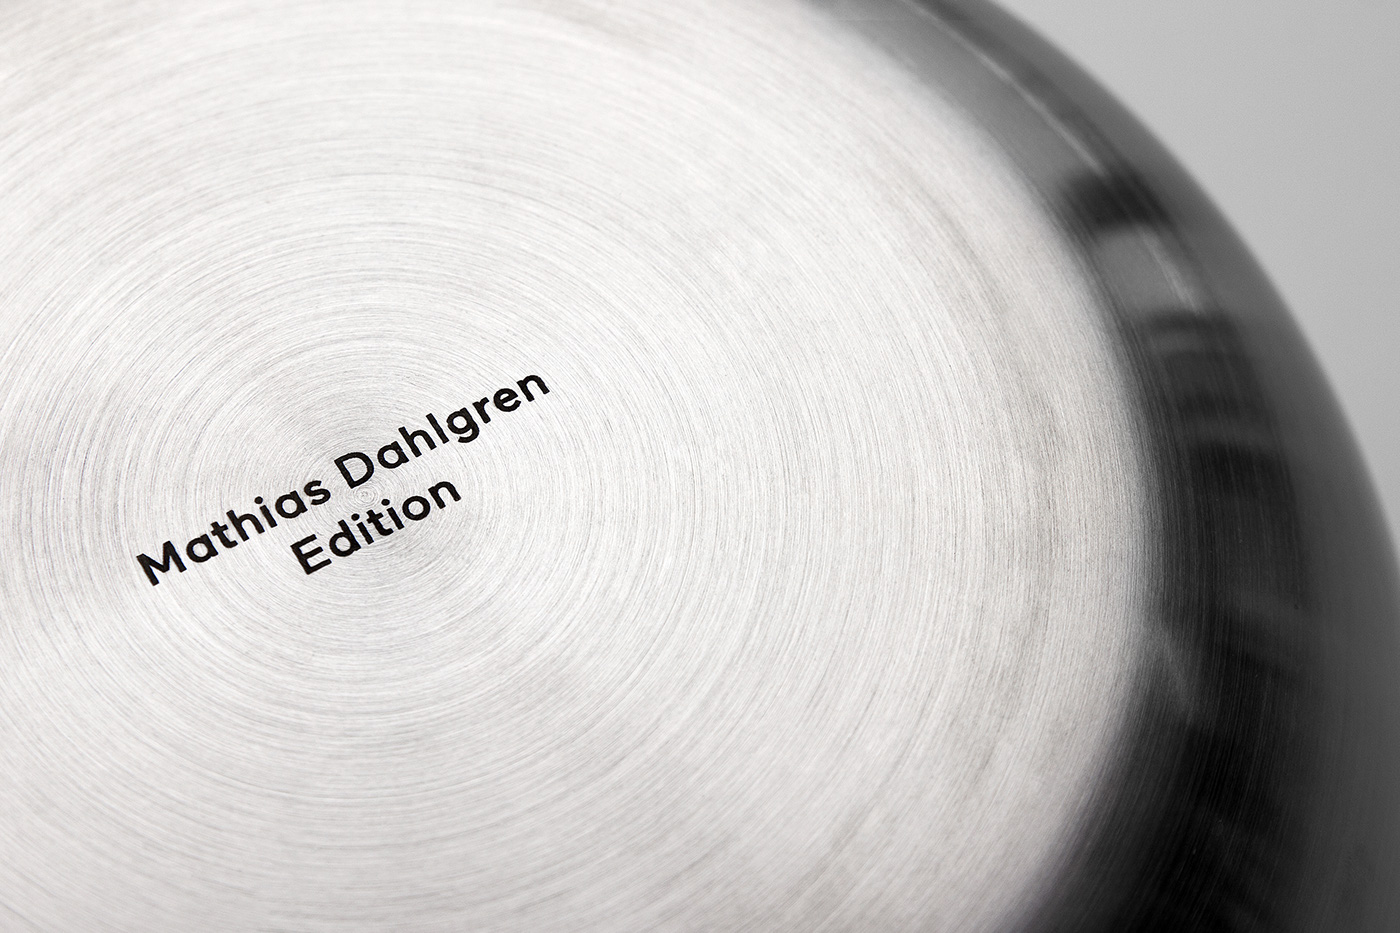 Mathias Dahlgren Edition极简的锅具包装设计